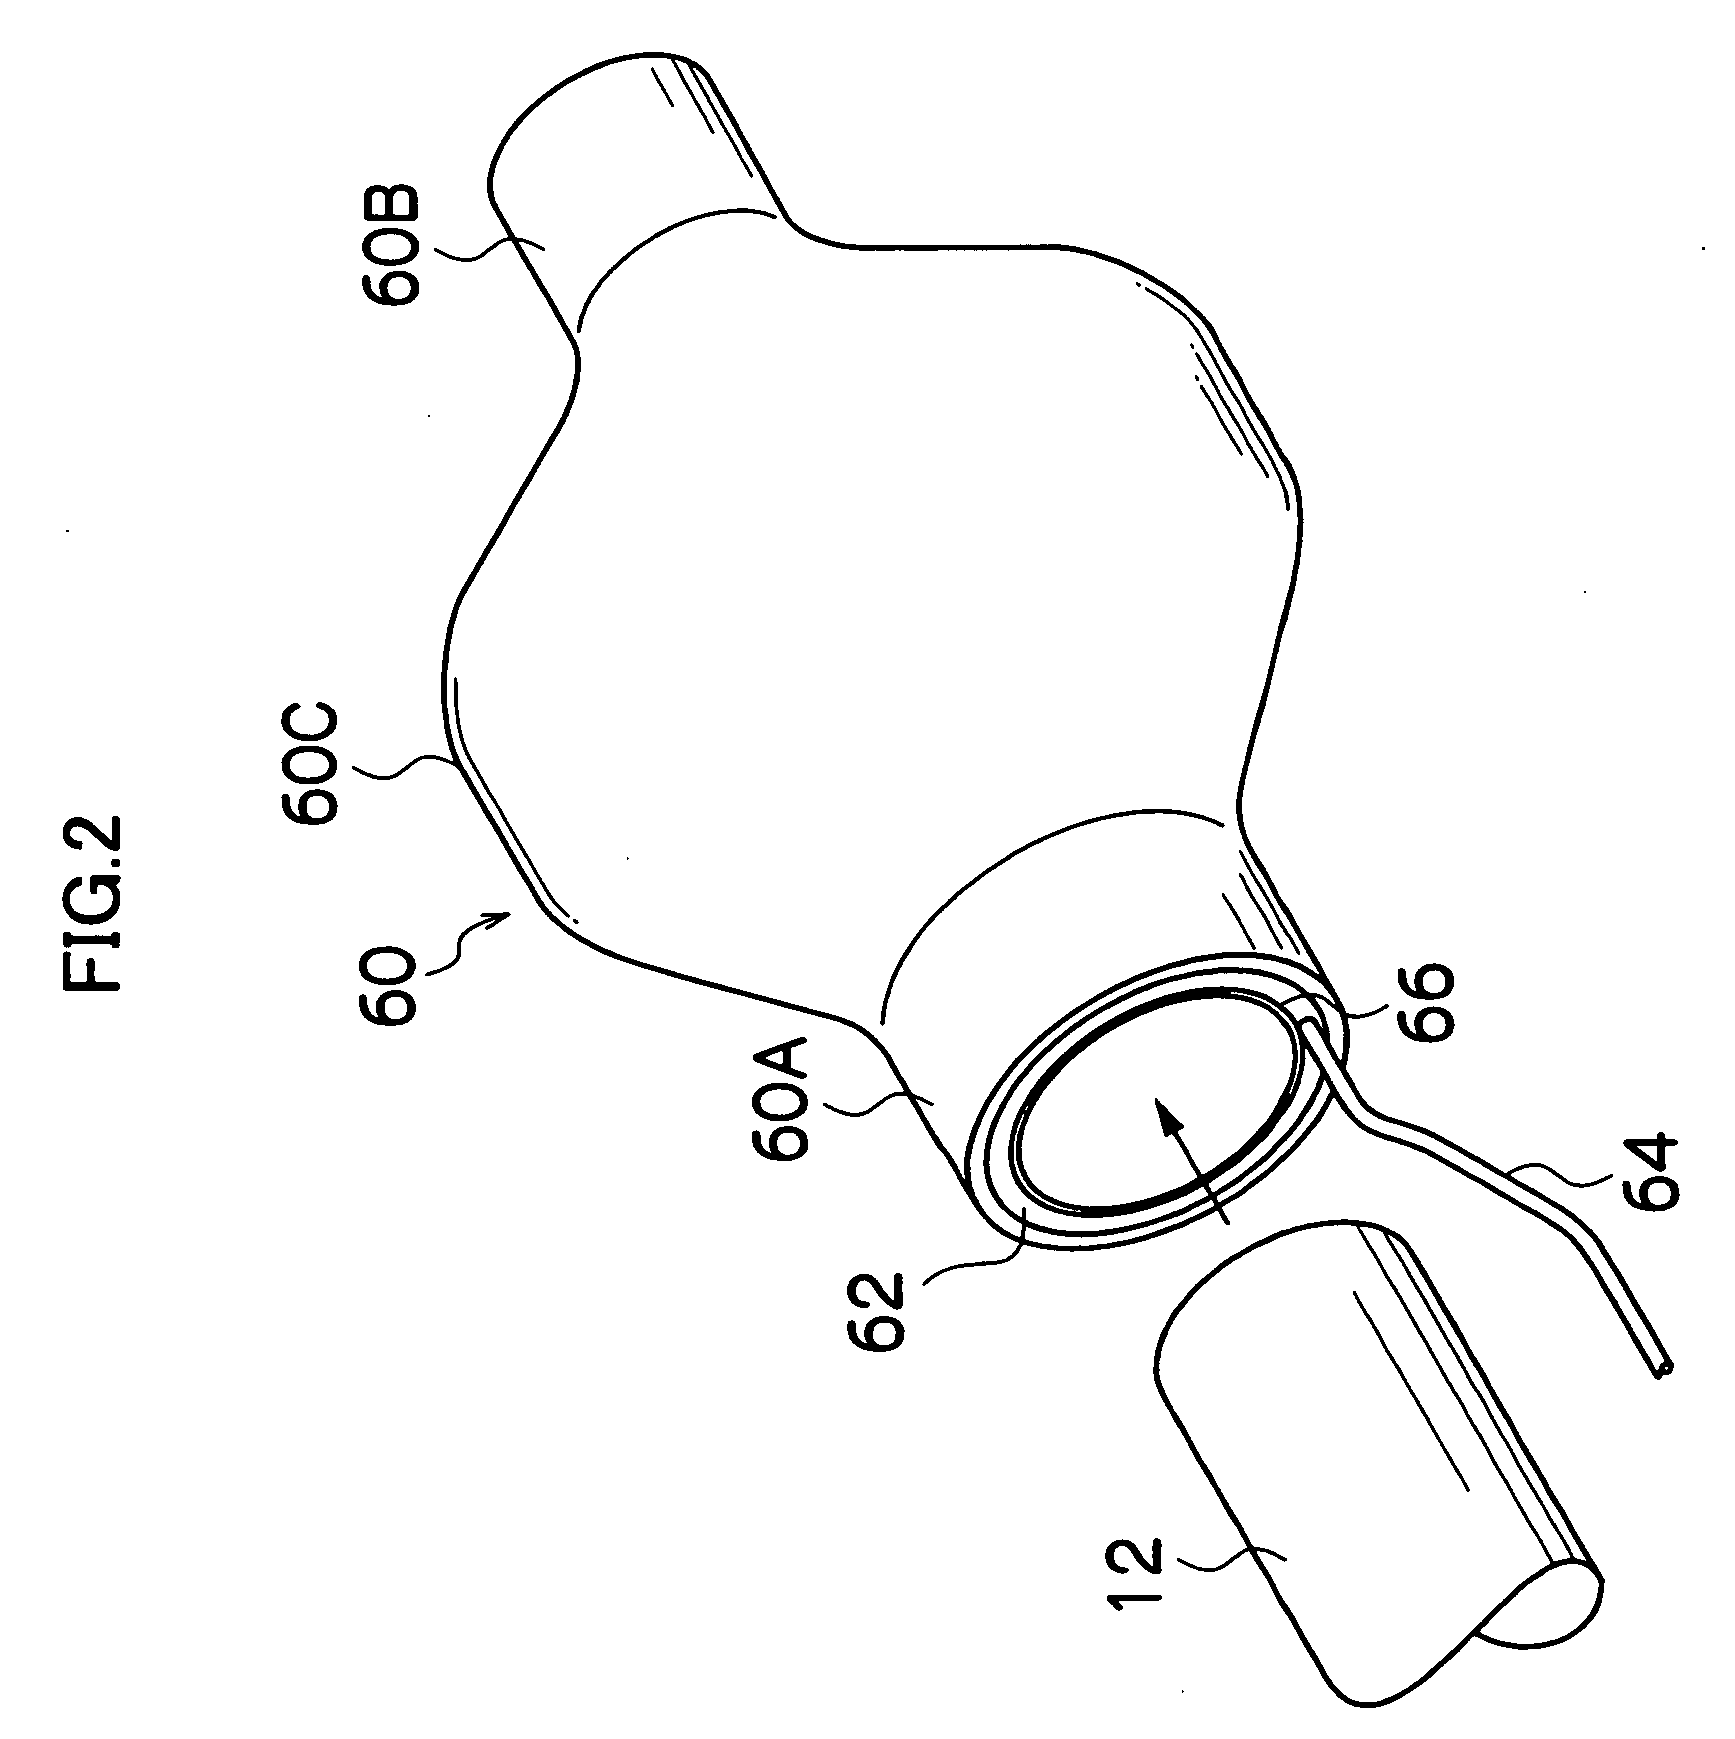 Balloon unit for endoscope apparatus